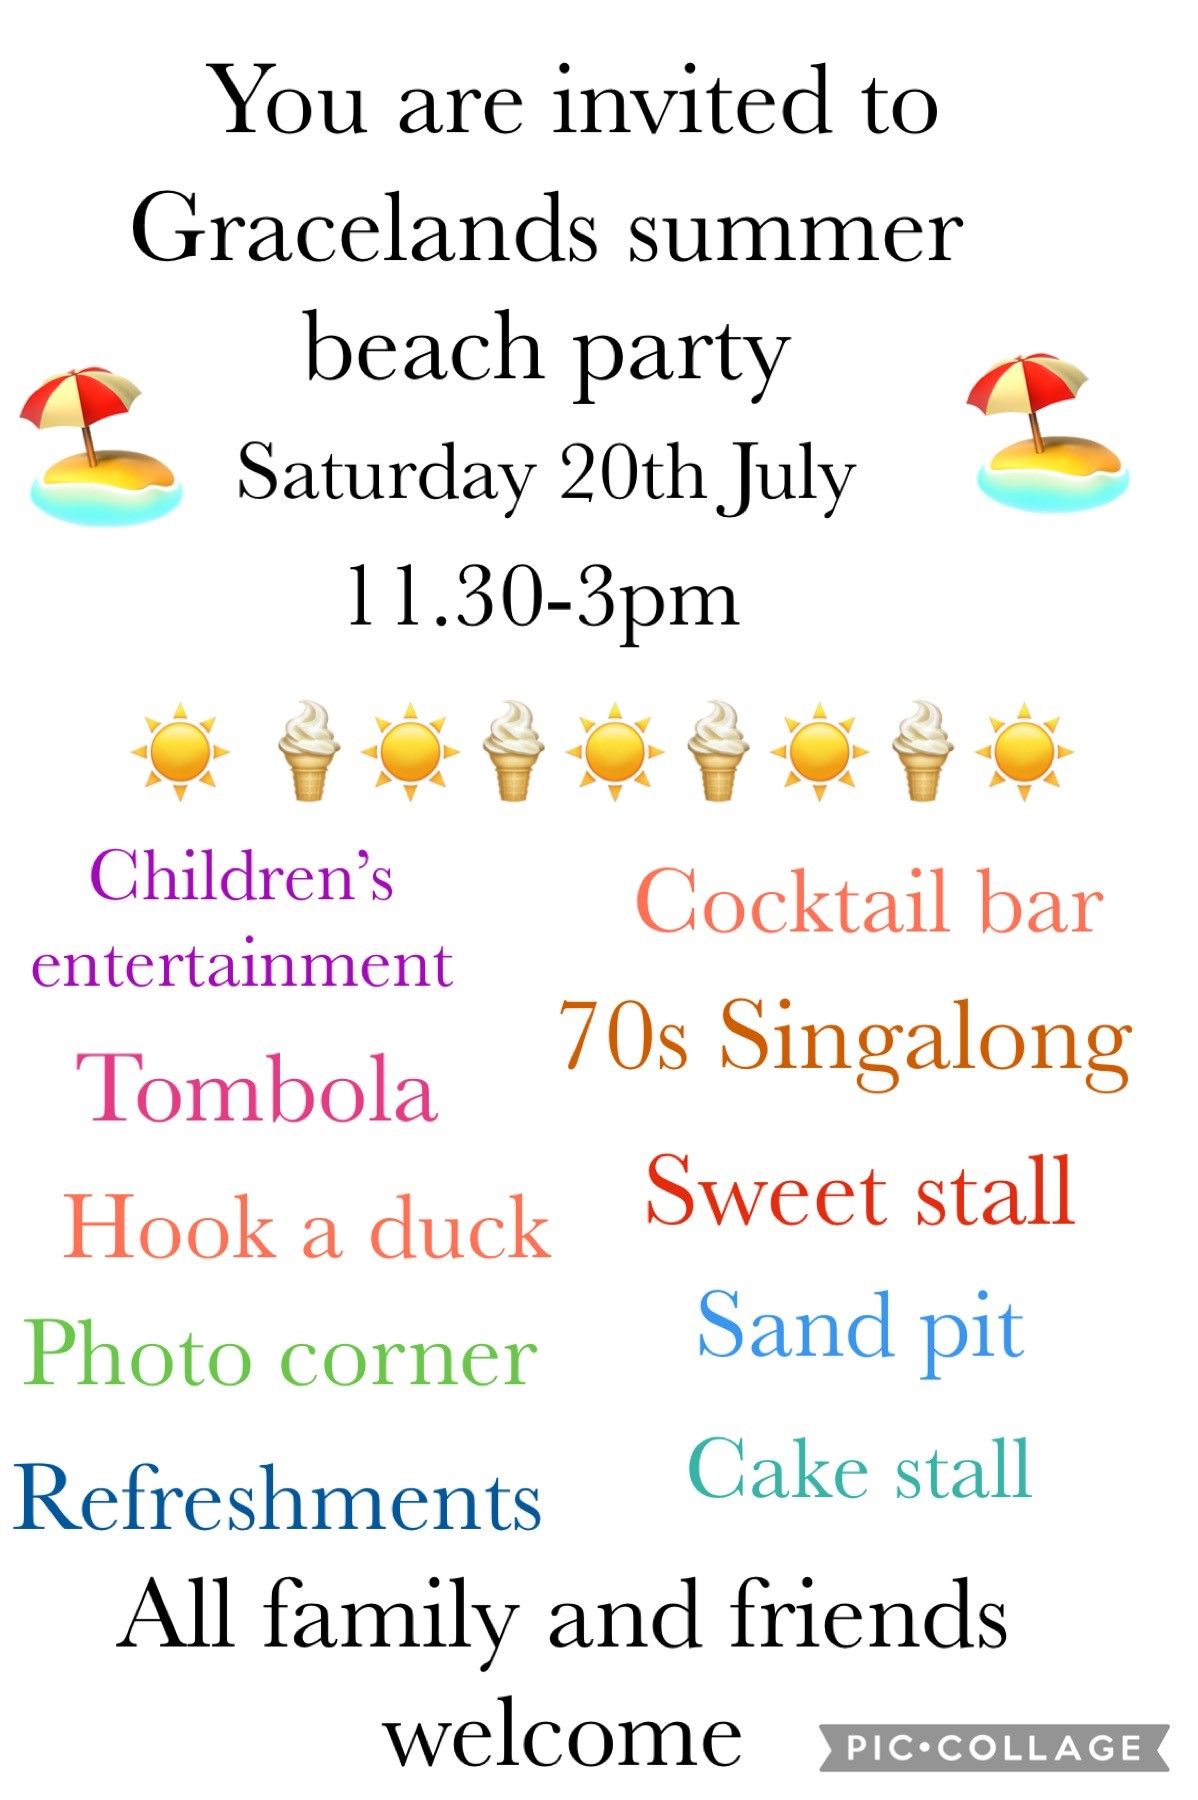 Graceland's Summer Beach Party